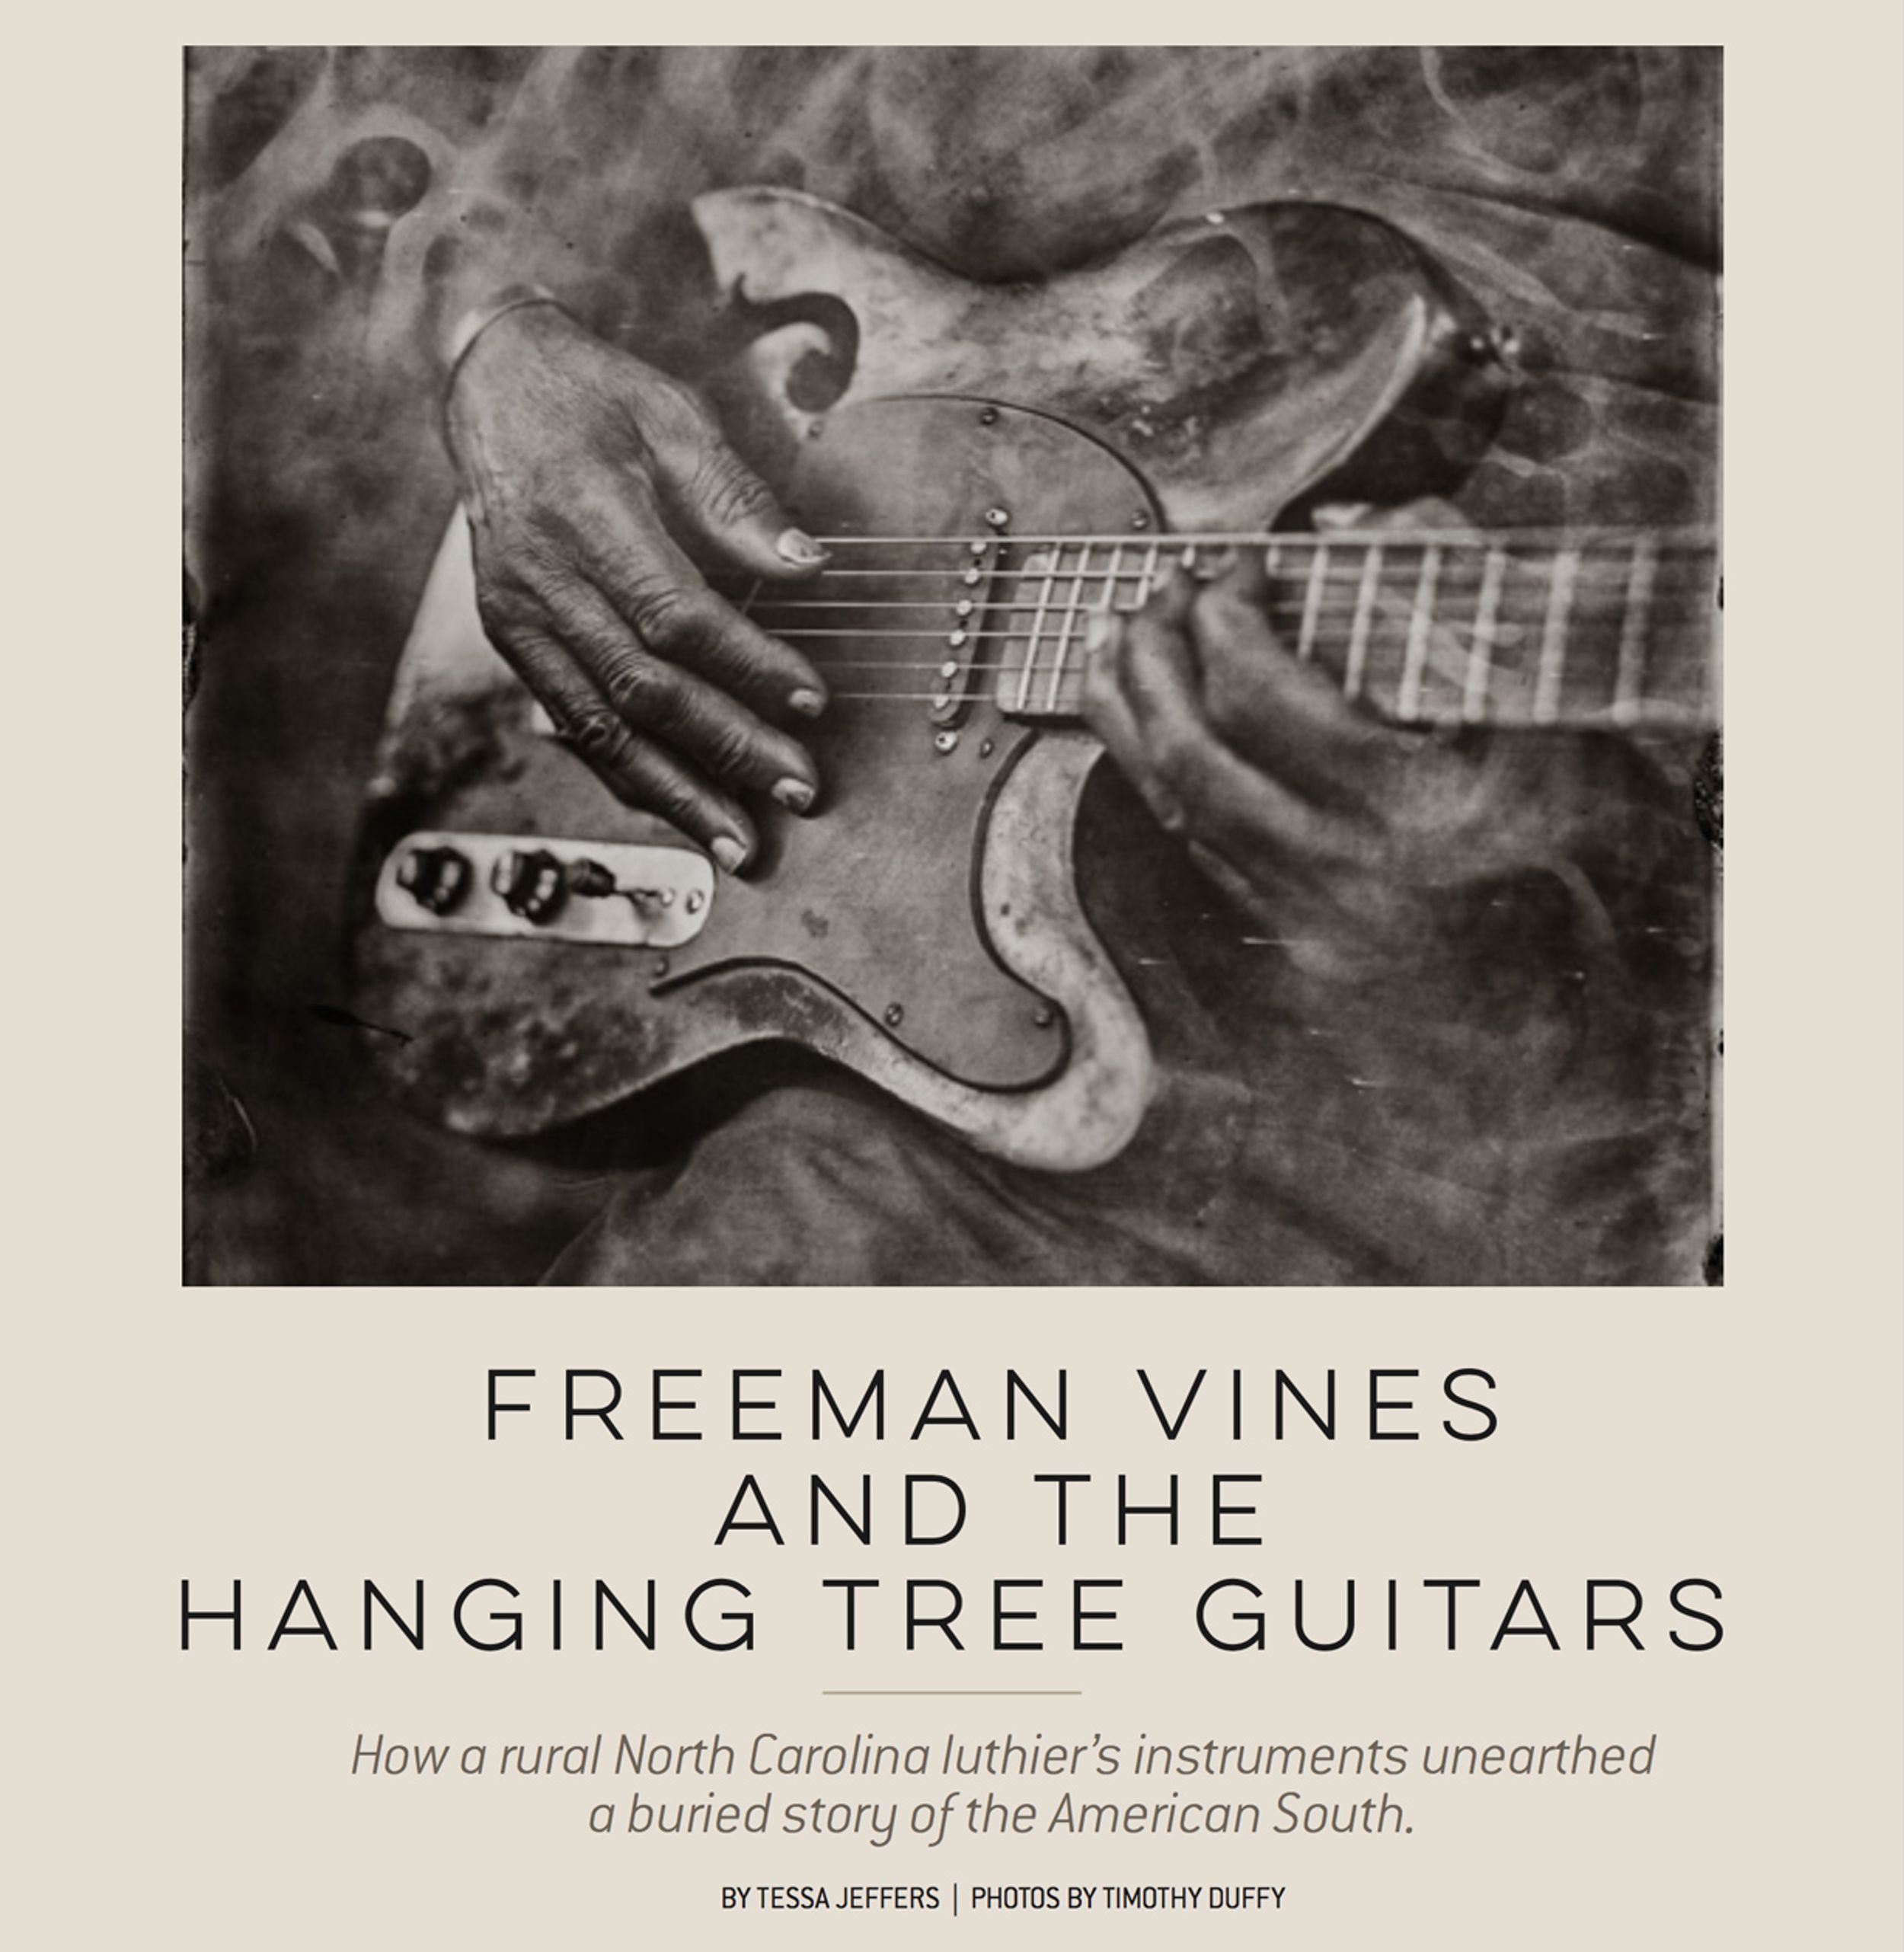 Freeman Vines and the Hanging Tree Guitars